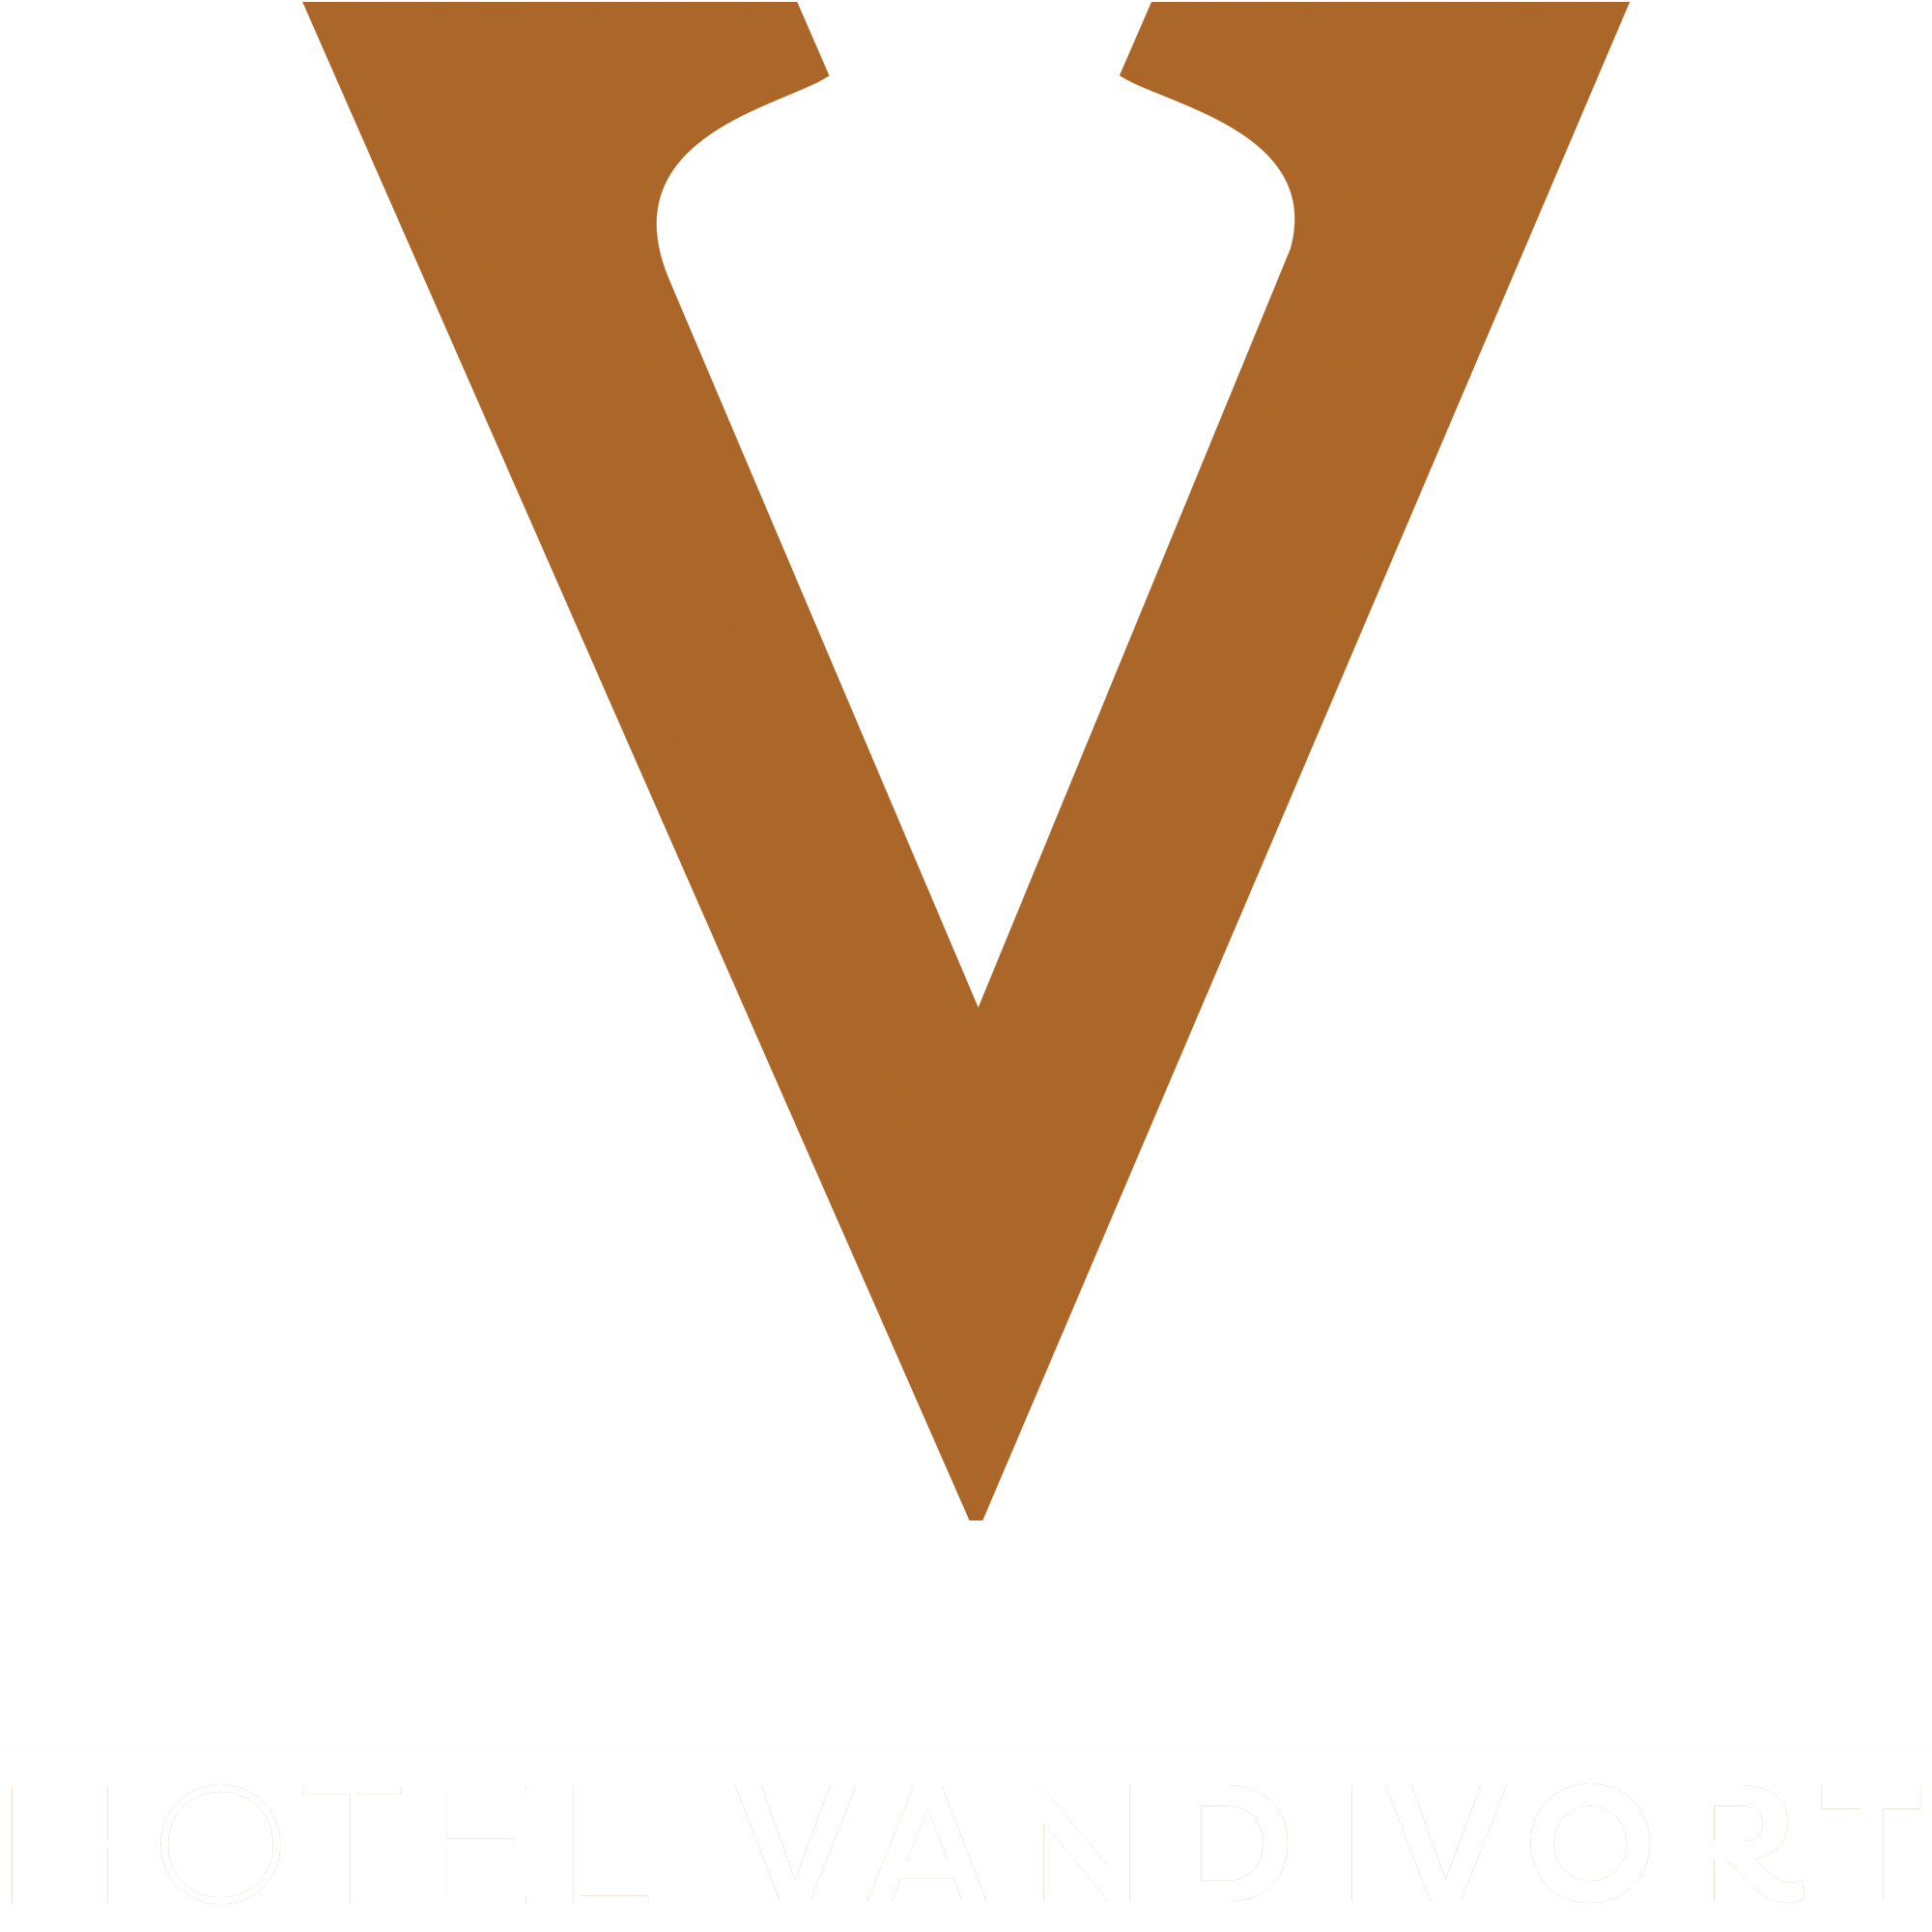 Hotel vandivort logo